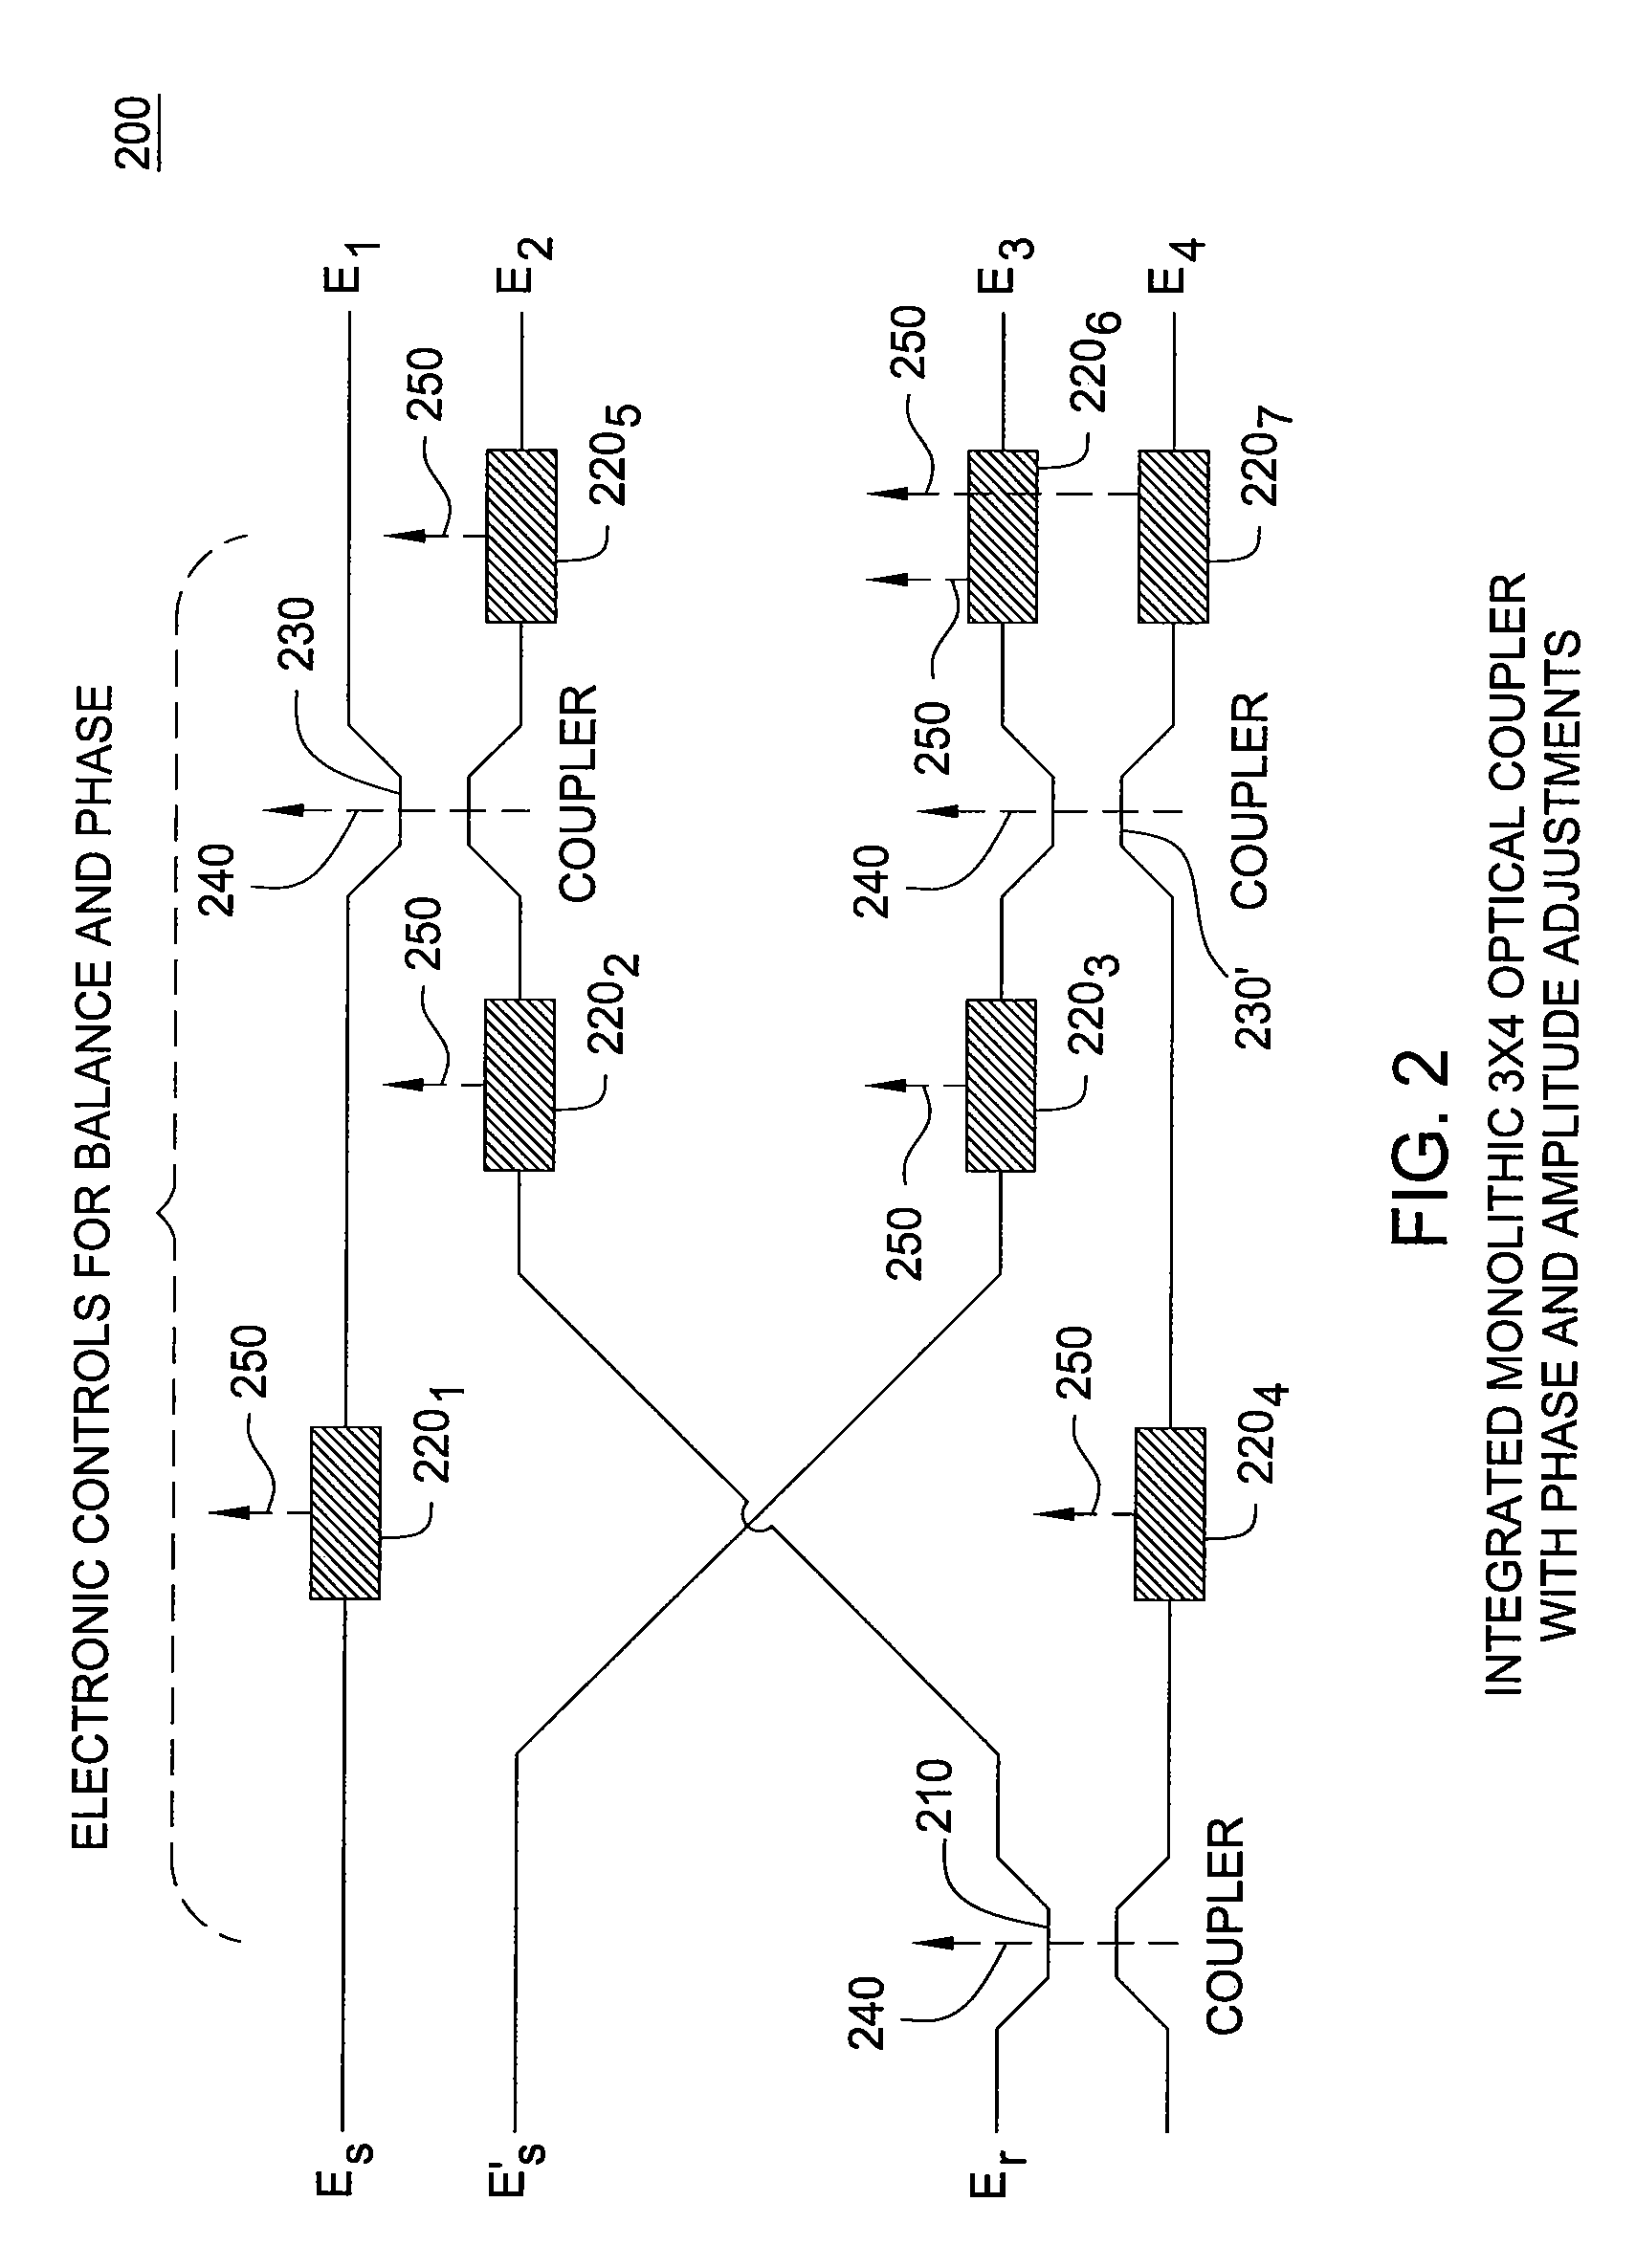 Balanced optical signal processor